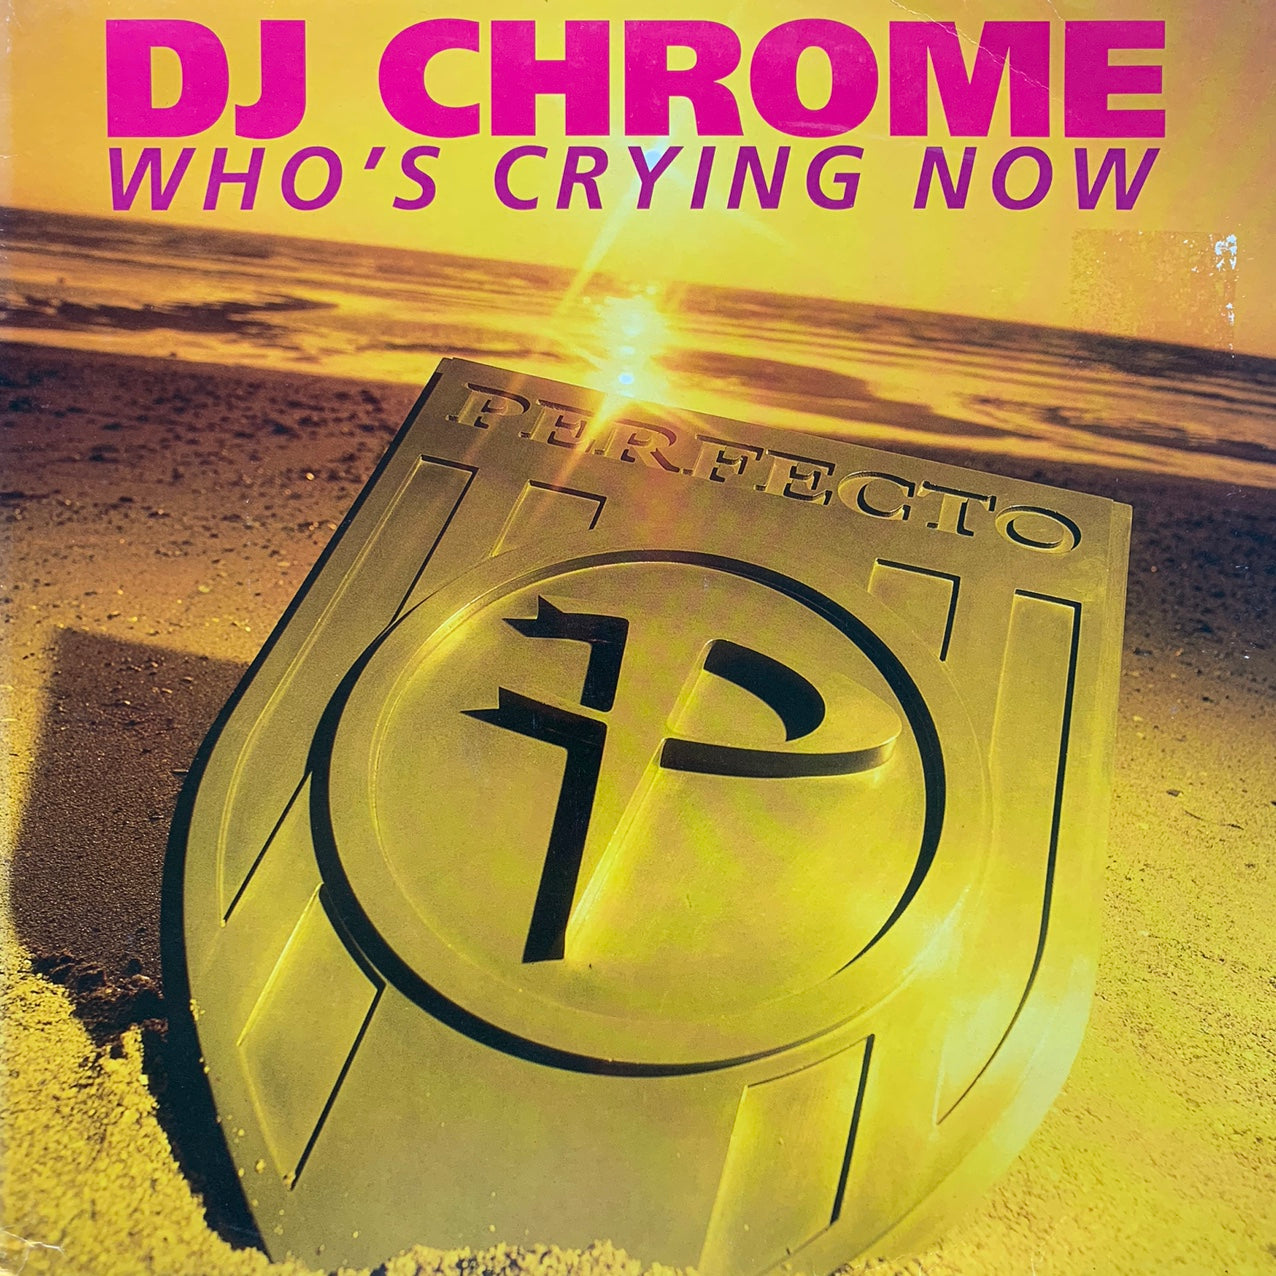 DJ Chrome “Who’s Crying Now” 5 Version 12inch Vinyl